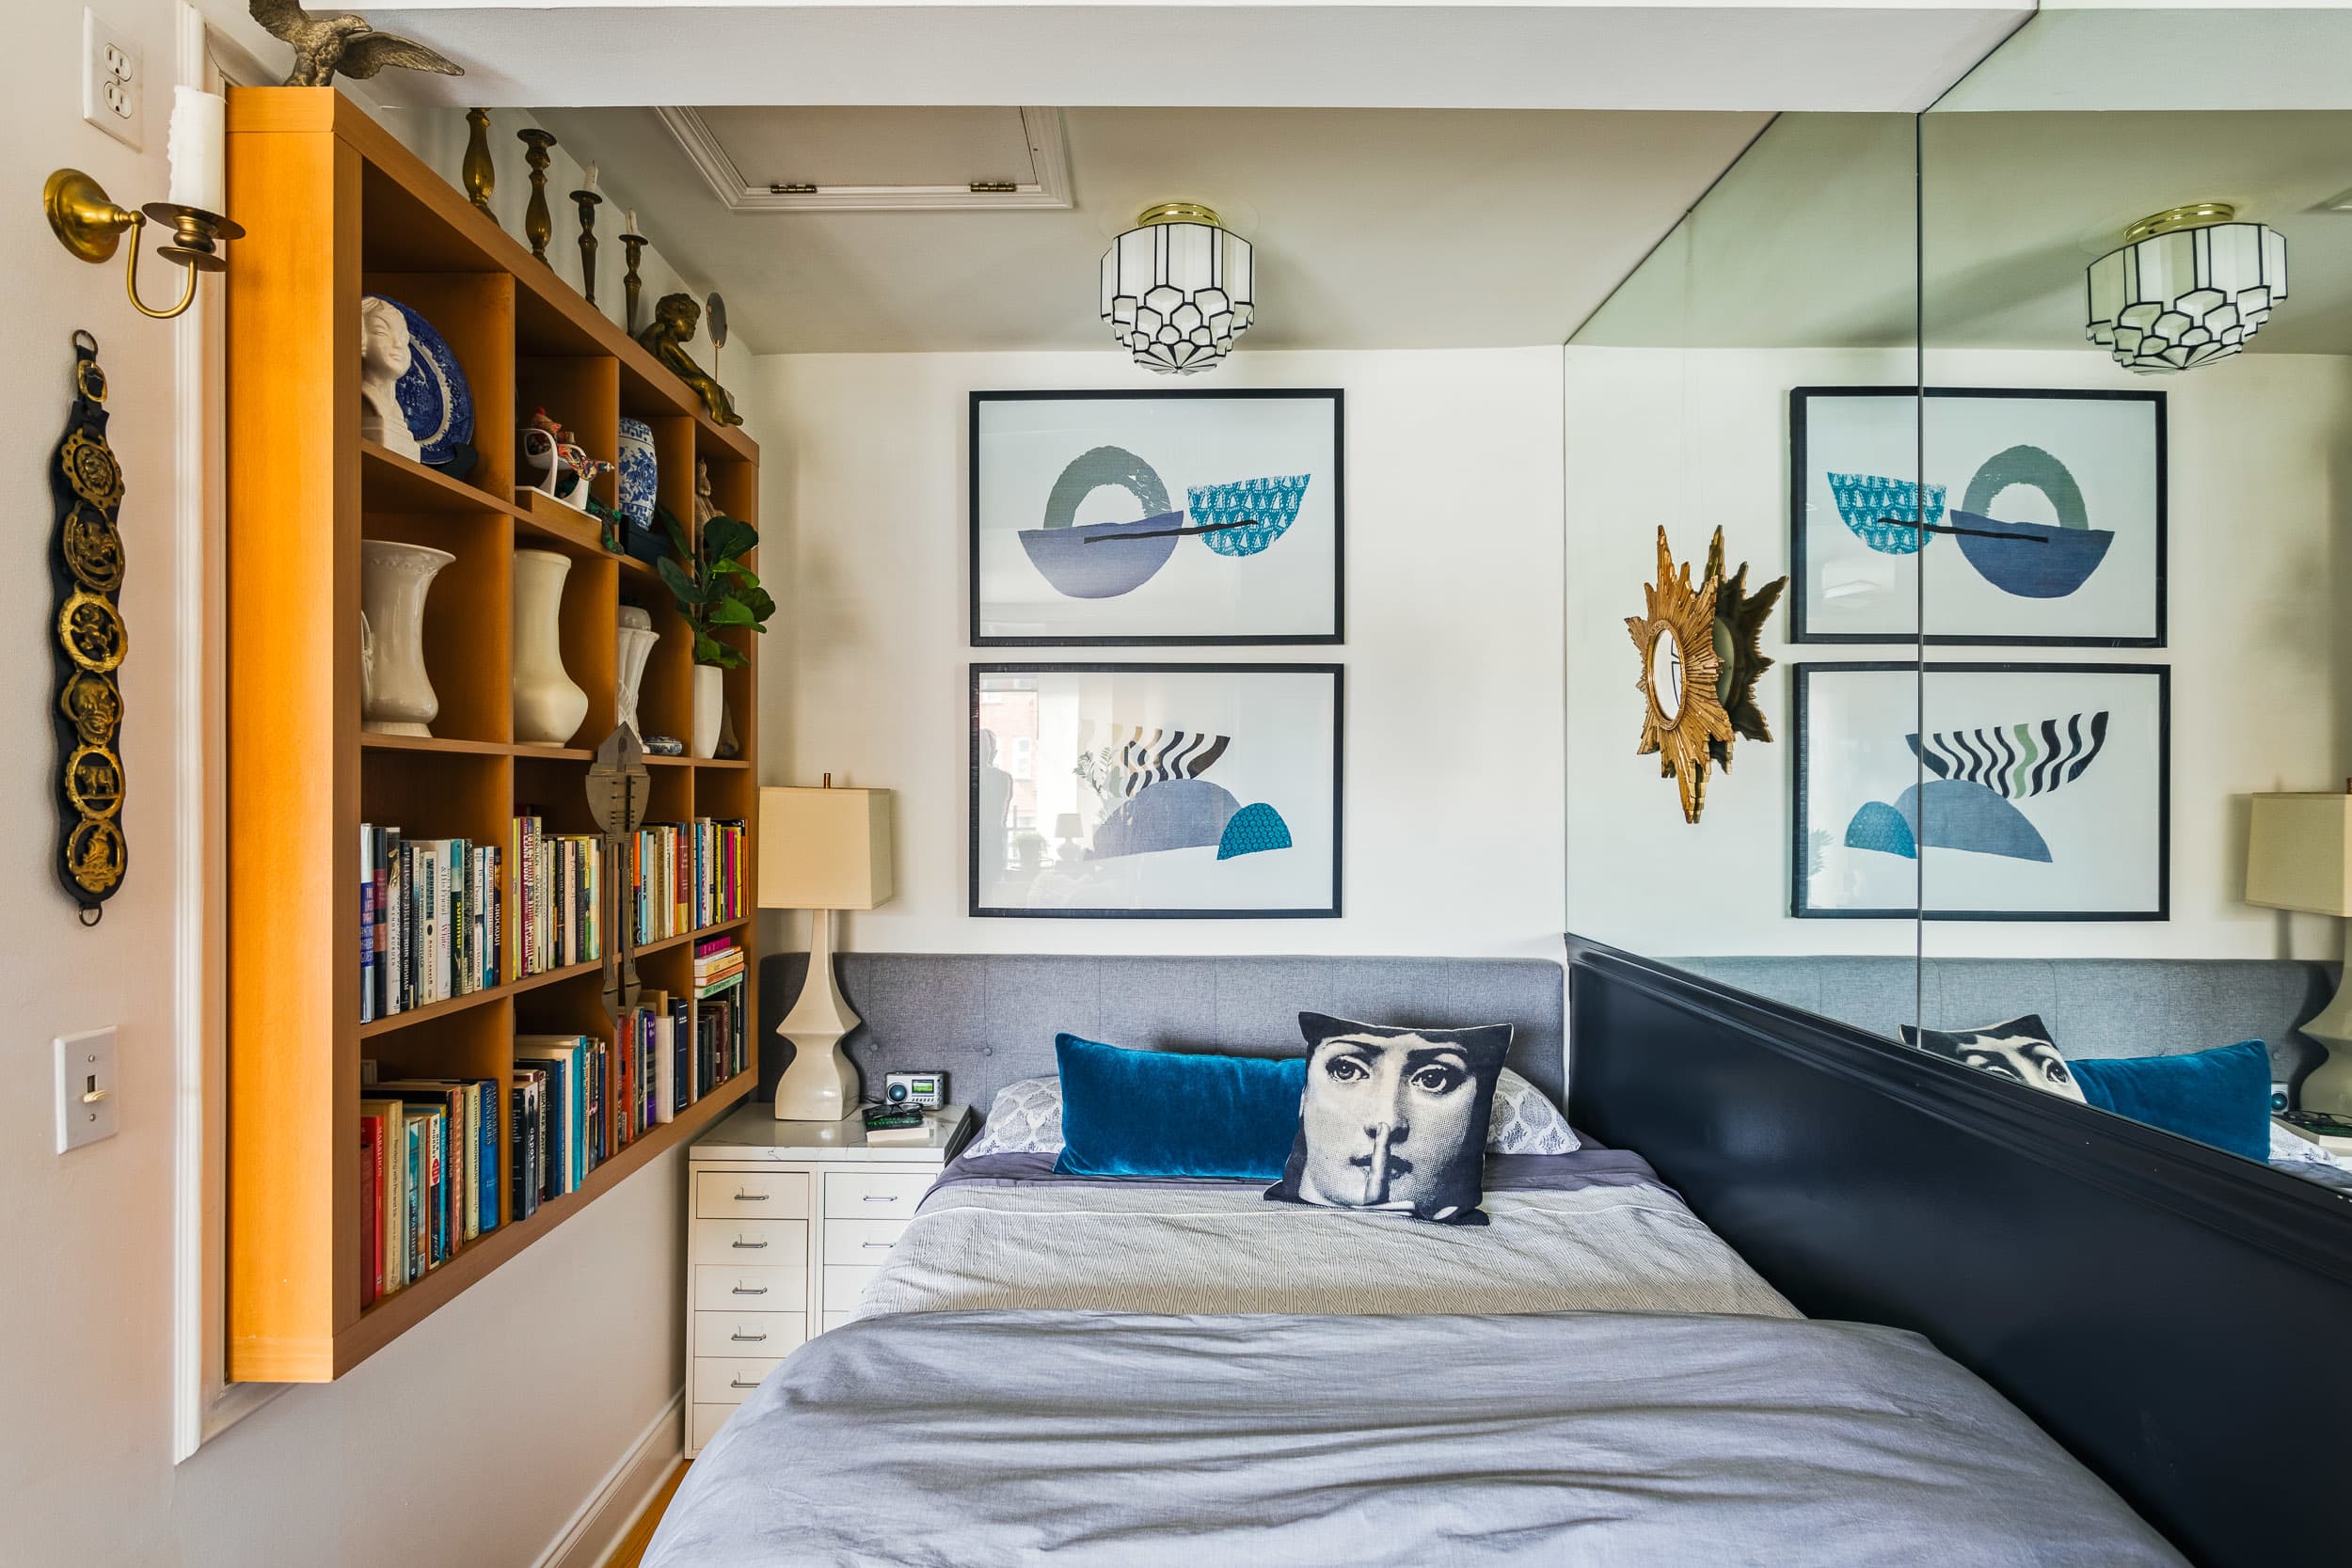 Bedroom Mirrors Ideas to Update Your Bedroom Interior!